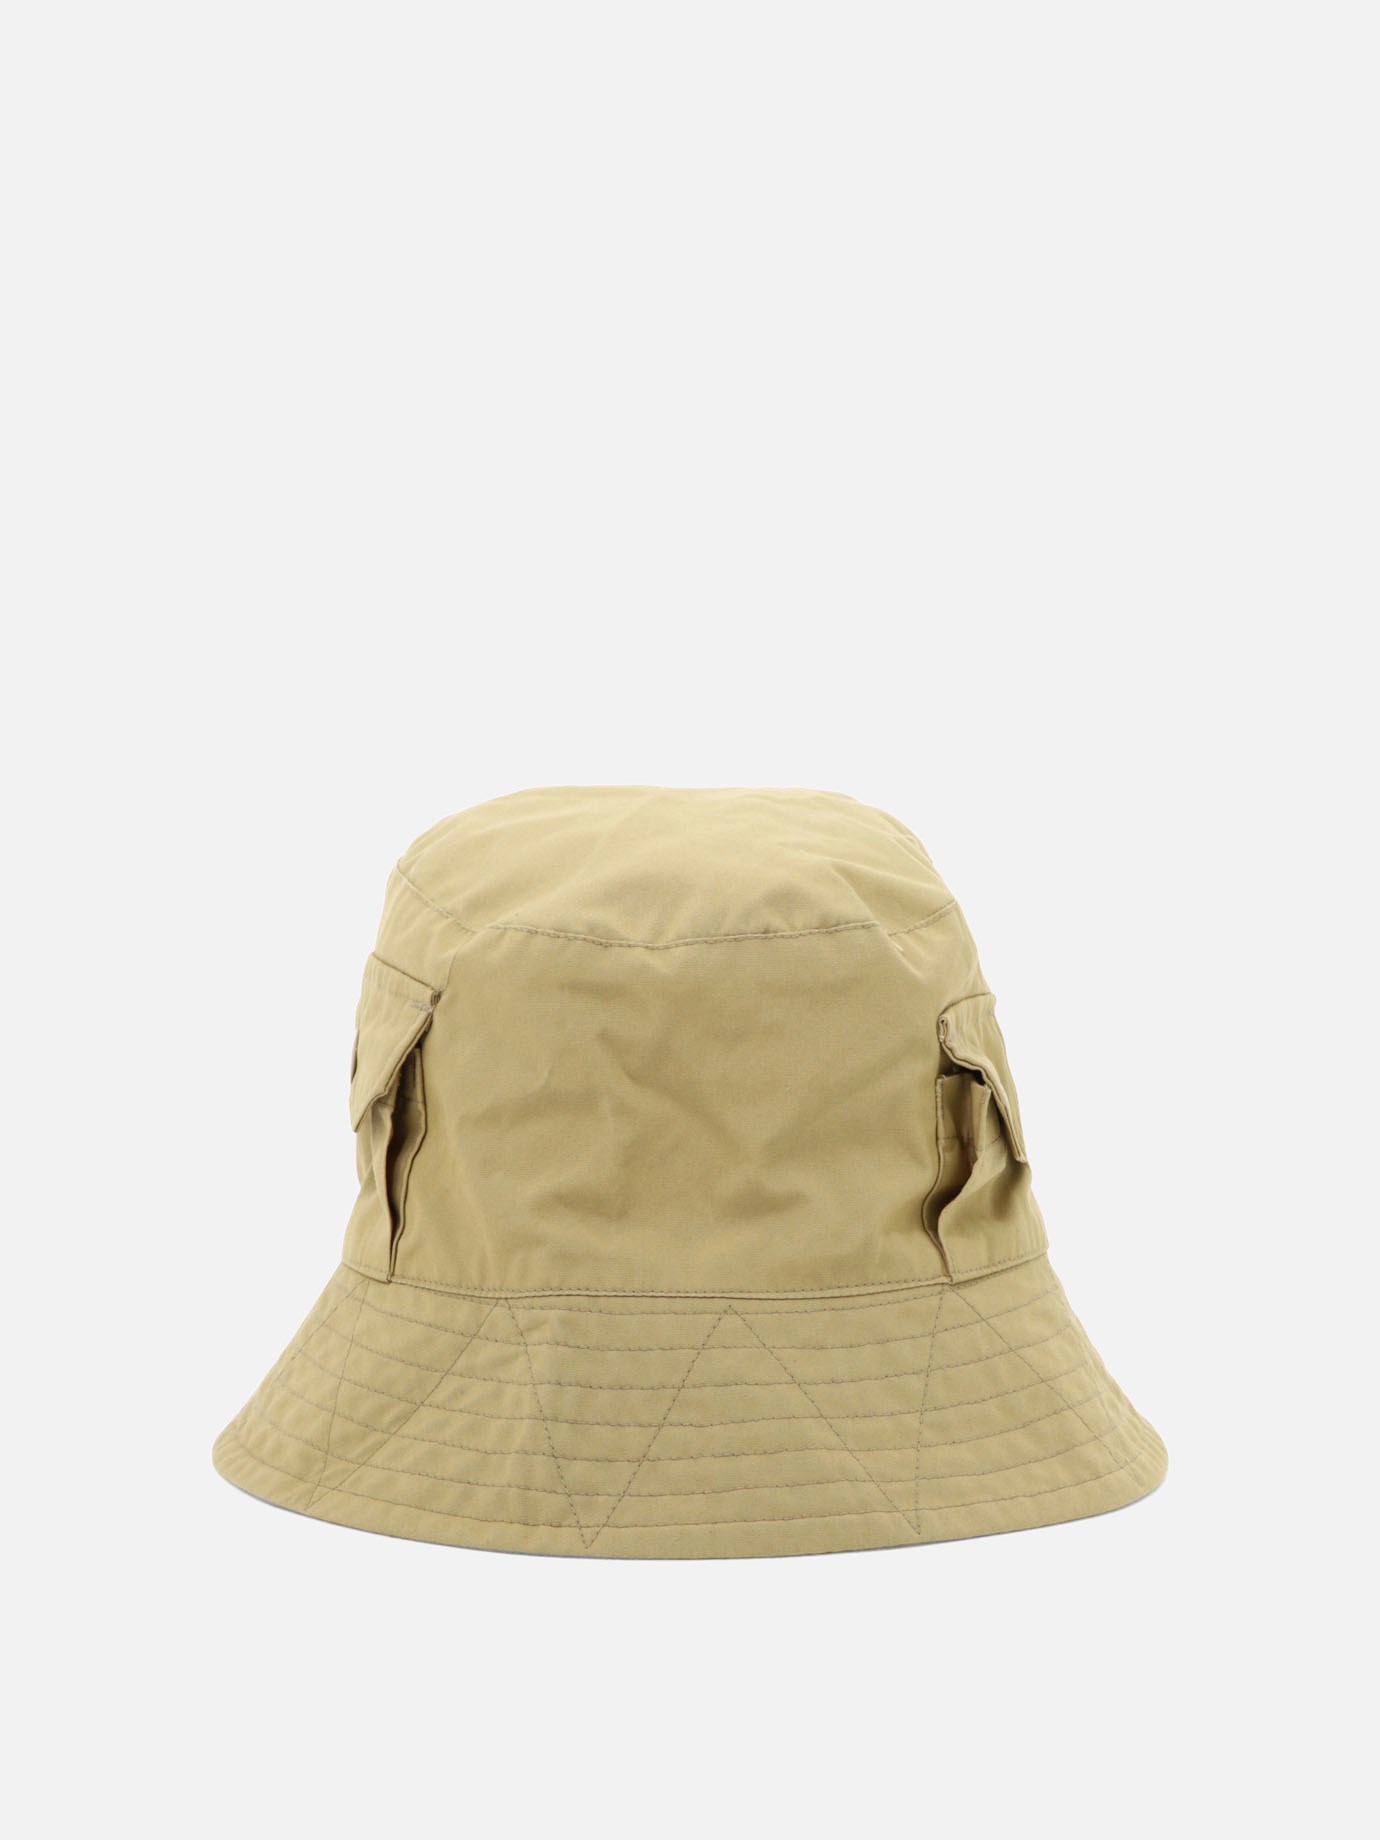  Explorer  bucket hatby Engineered Garments - 2